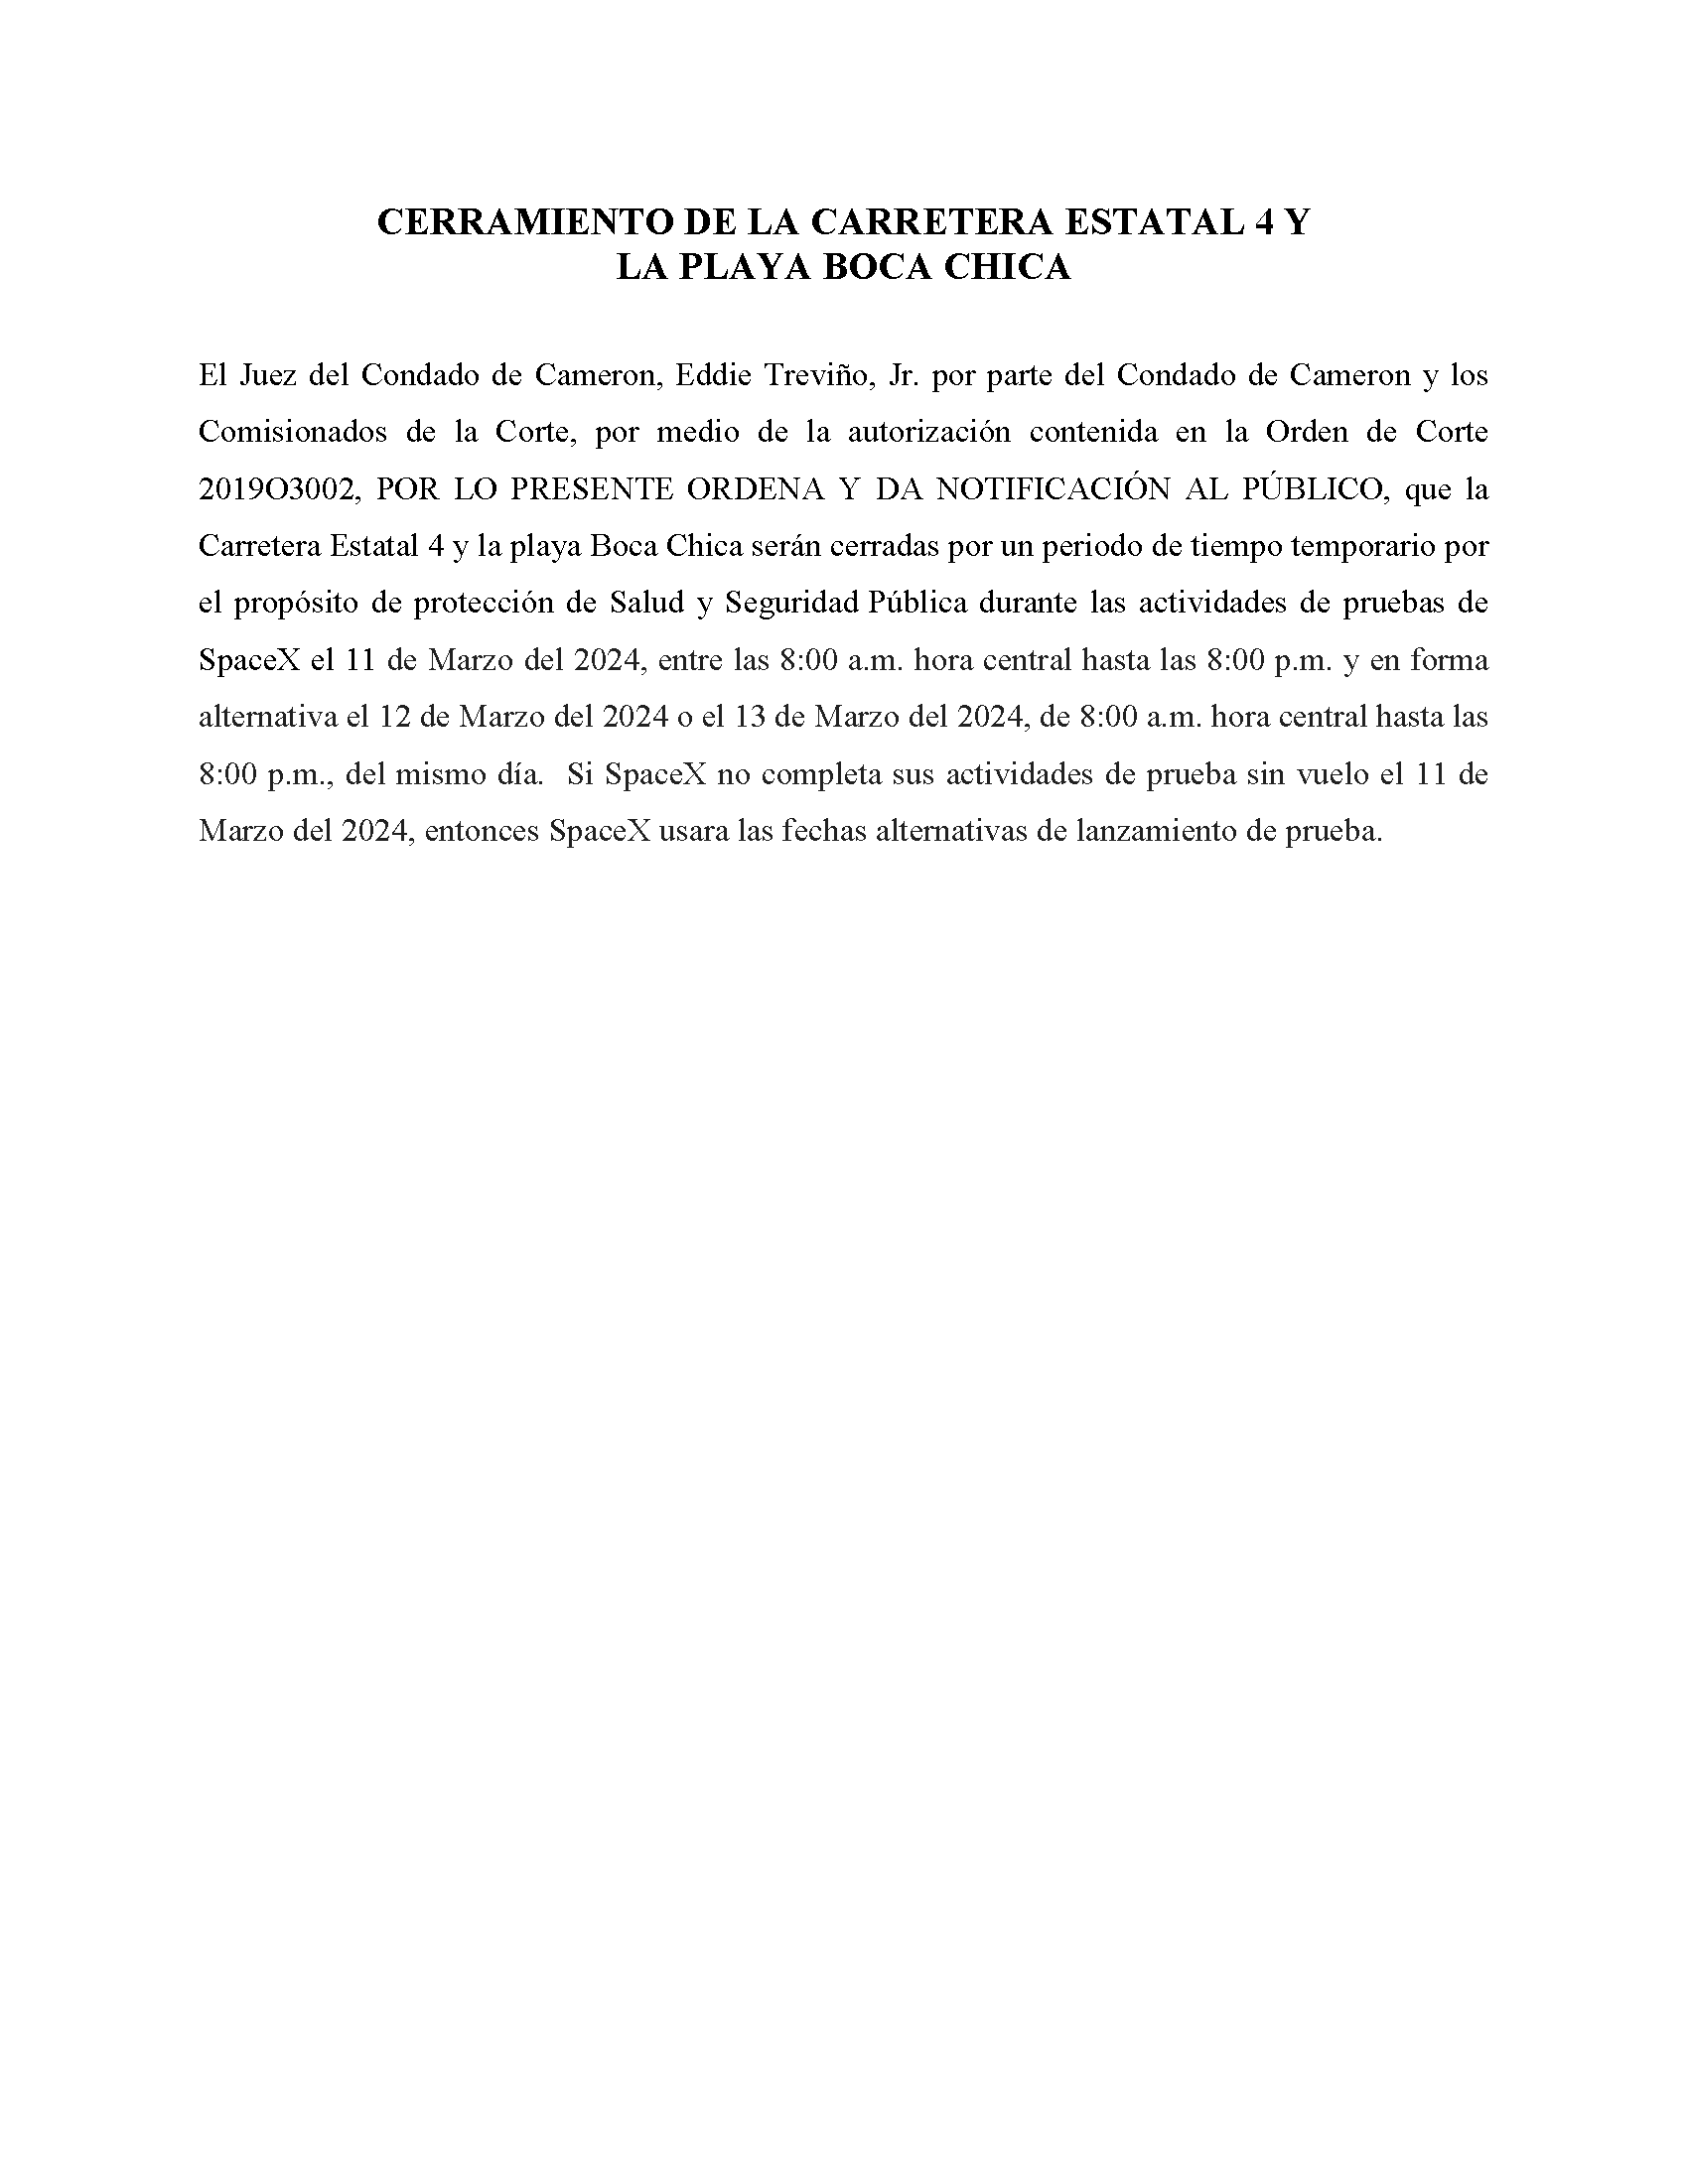 ORDER.CLOSURE OF HIGHWAY 4 Y LA PLAYA BOCA CHICA.SPANISH.03.11.2024 002